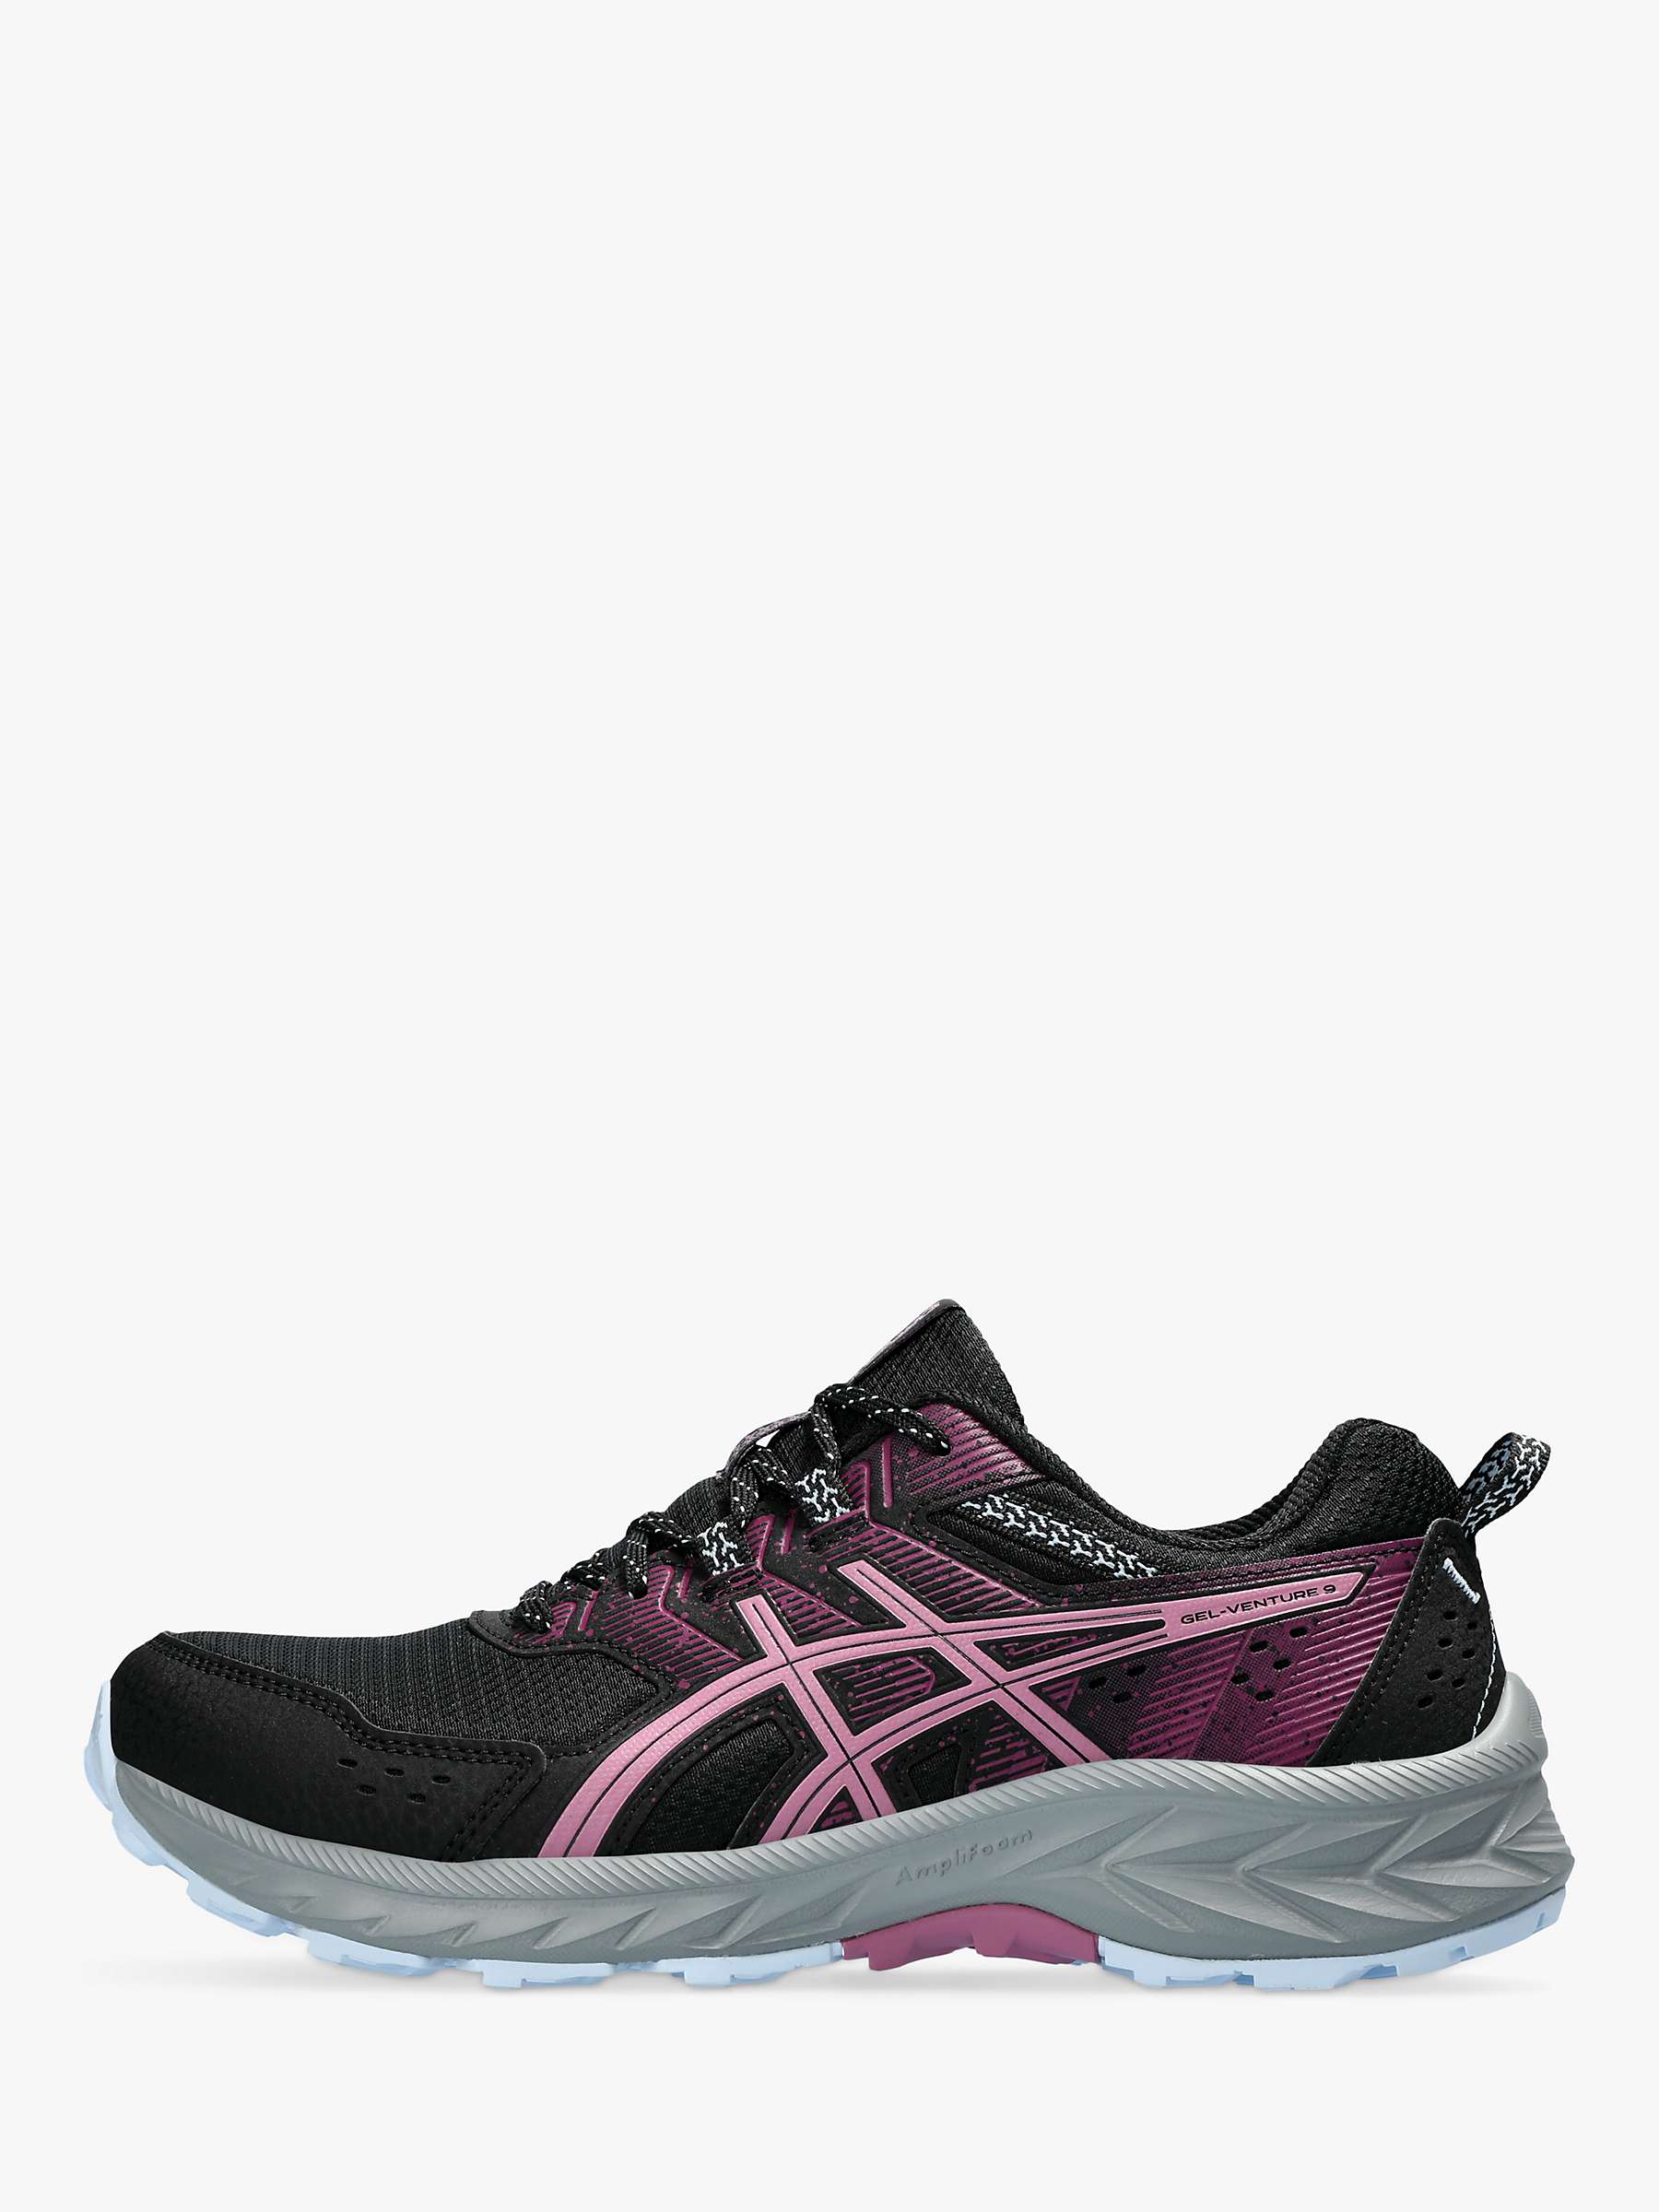 Buy ASICS GEL-VENTURE 9 Women's Trail Running Shoes, Black/Berry Online at johnlewis.com